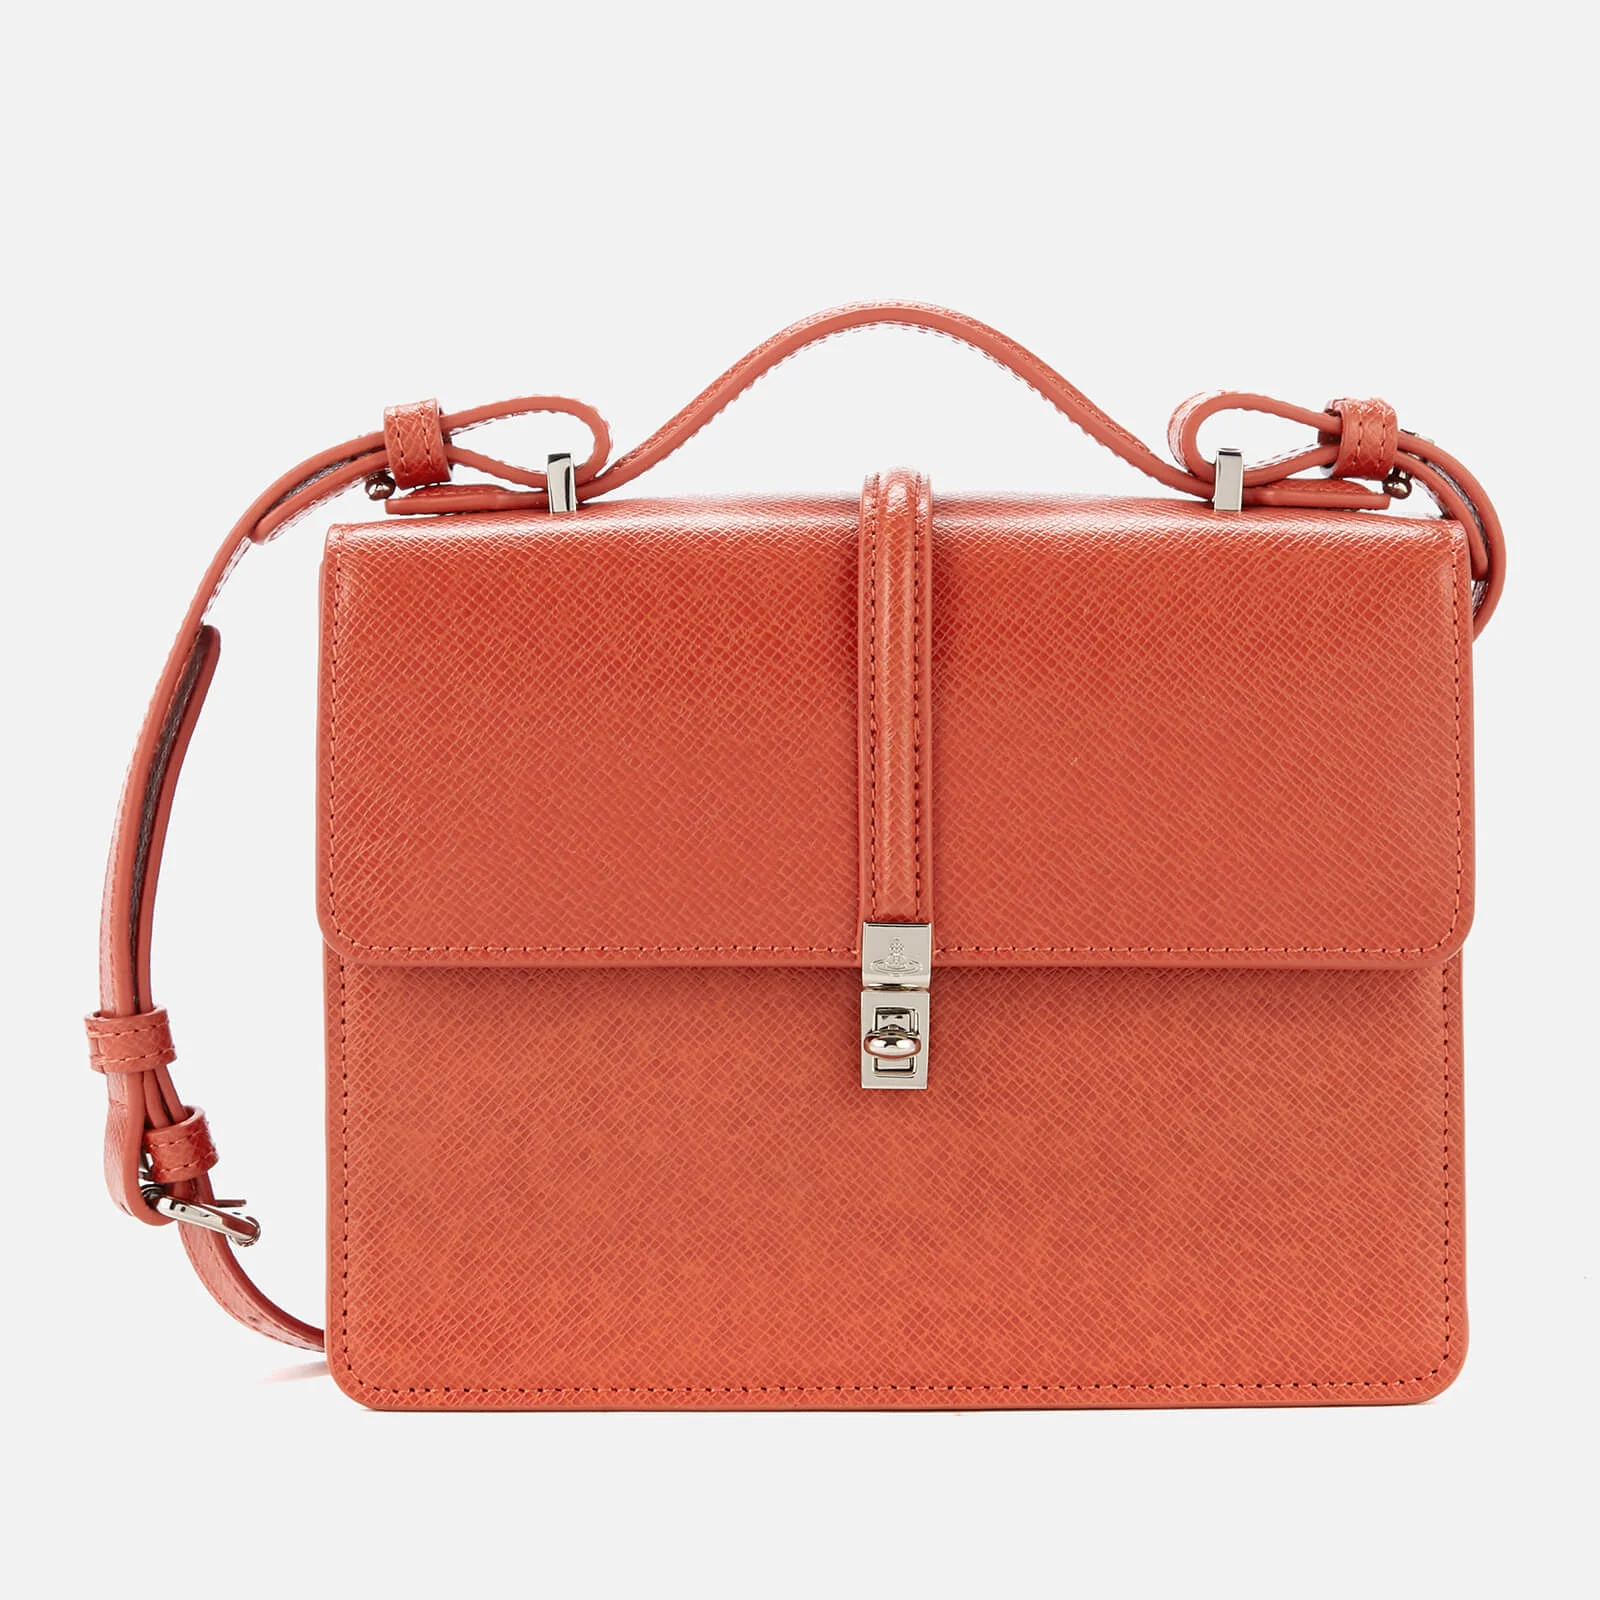 Vivienne Westwood Women's Sofia Medium Shoulder Bag - Orange Image 1